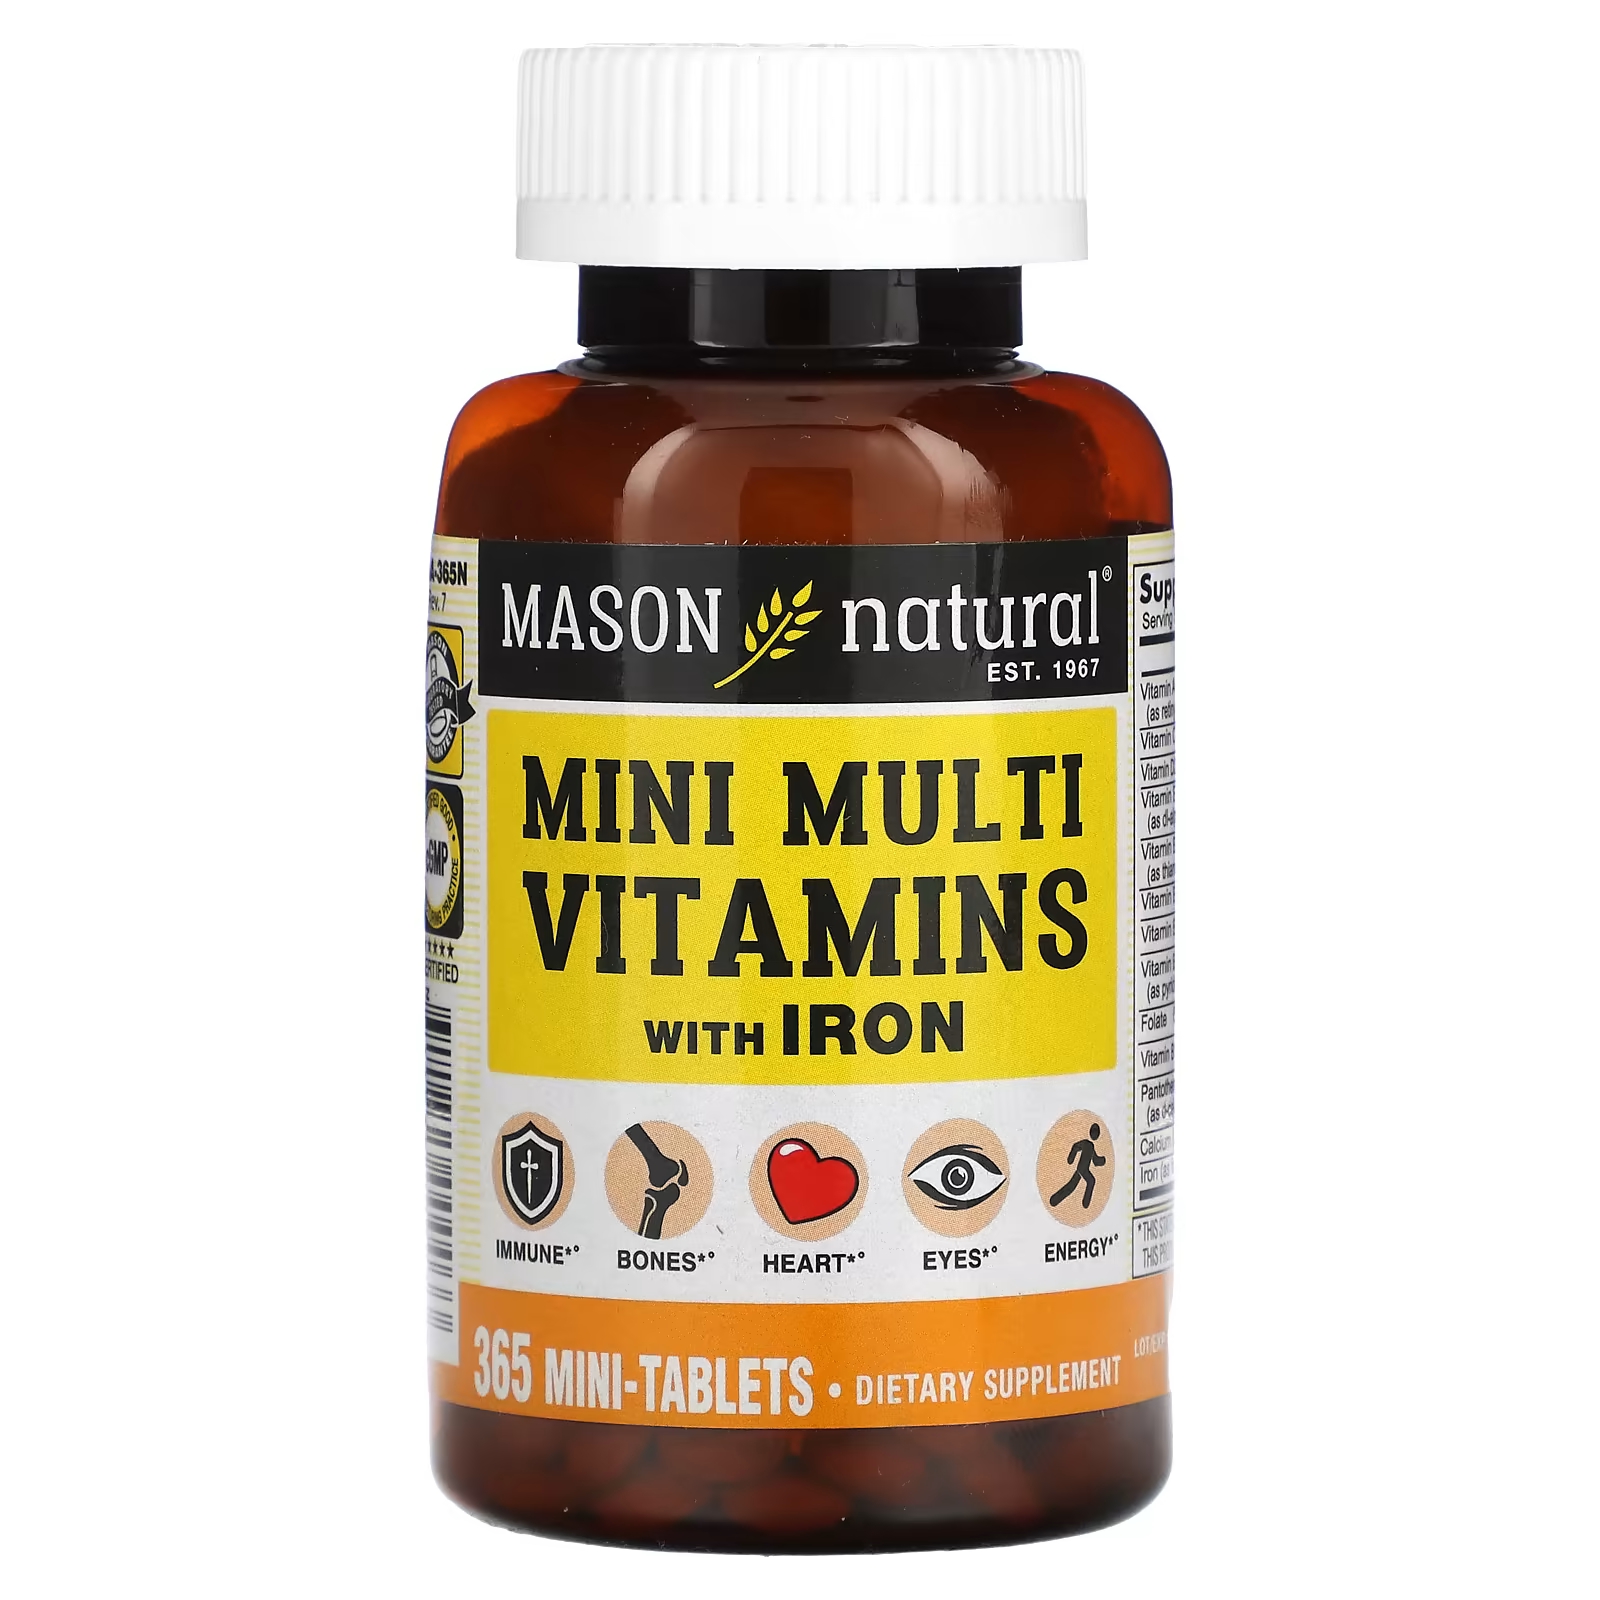 Мультивитамины Mason Natural с железом, 365 мини-таблеток mason natural potassium gluconate 595 mg 100 tablets